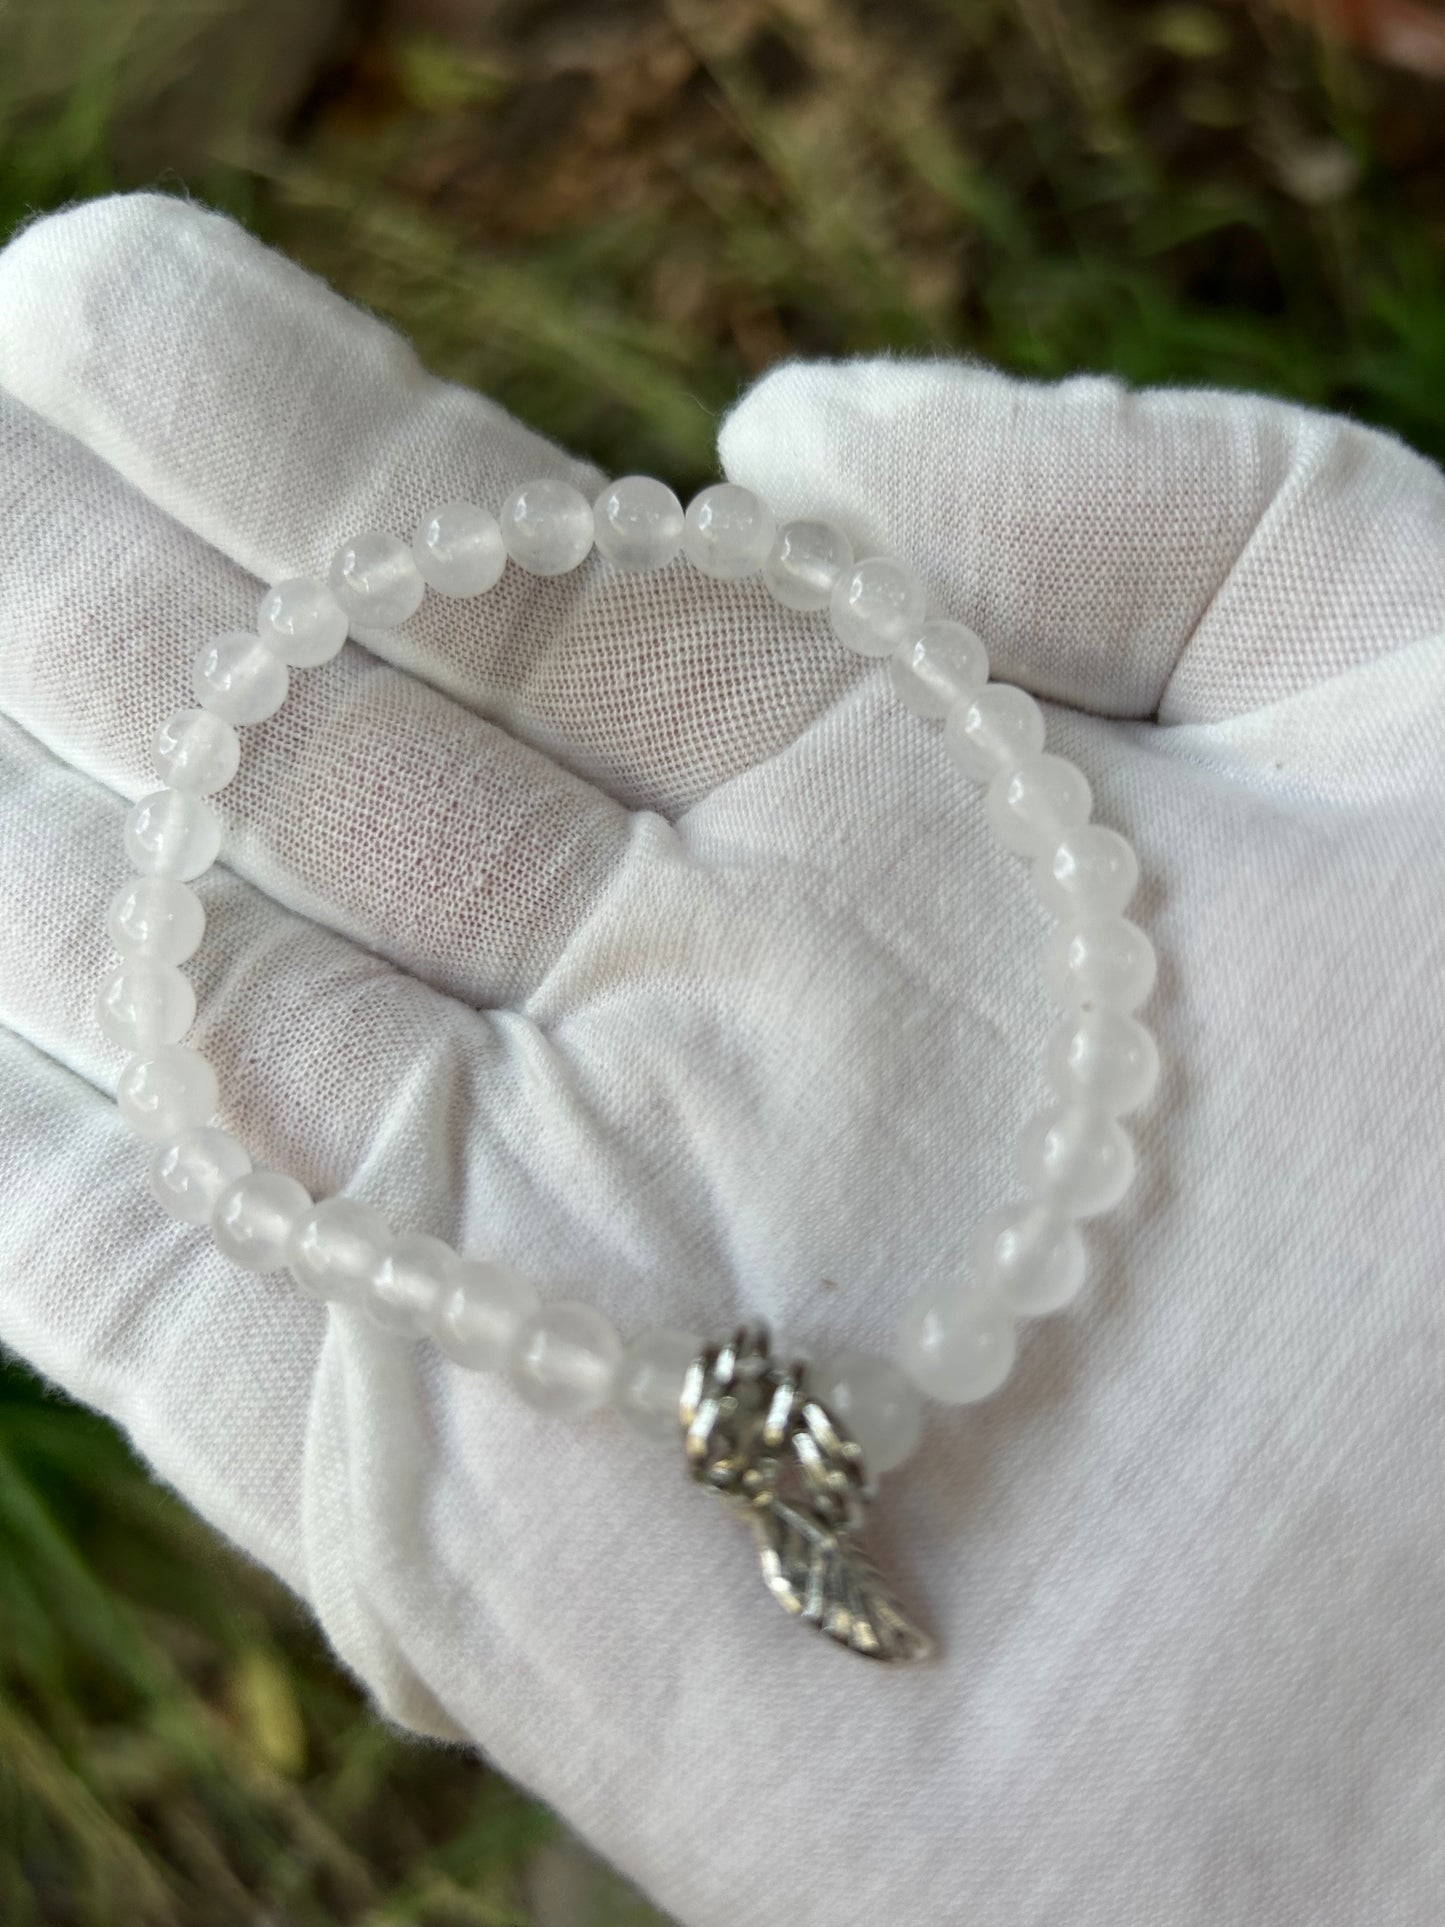 Polished White Agate Bead Bracelet with  silver Leaf Charm